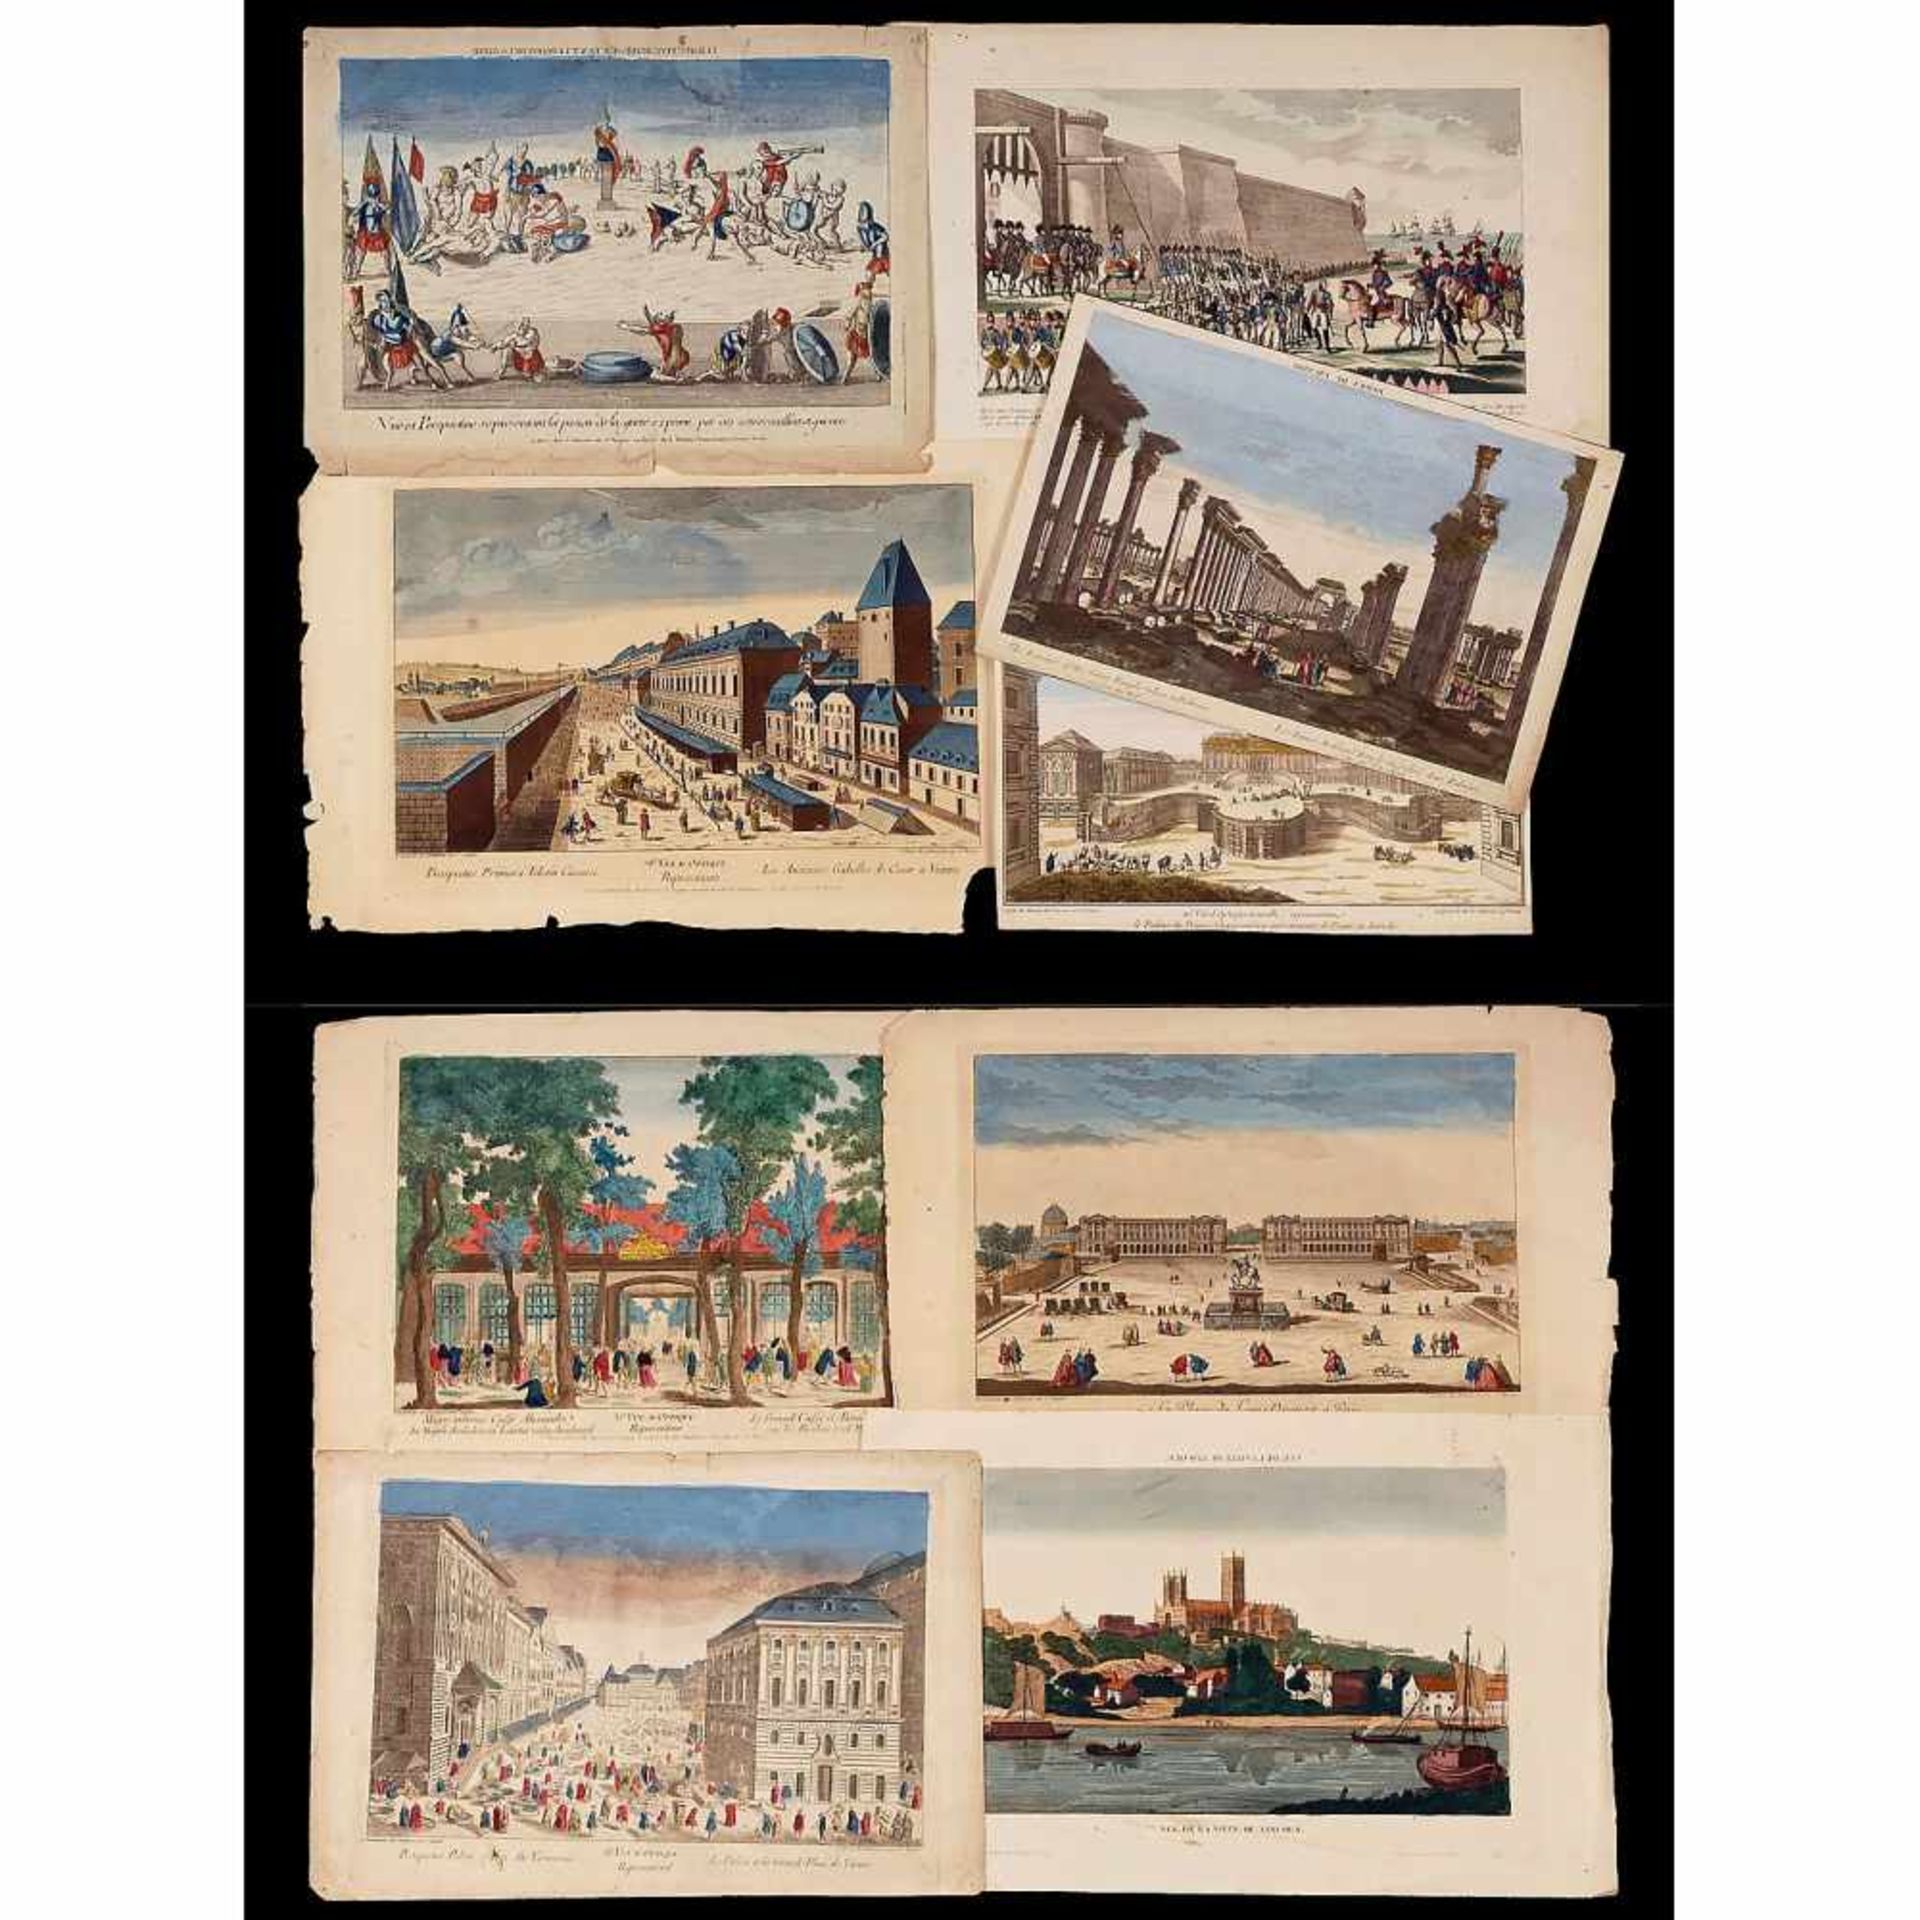 9 Vues d'Optique, c. 1800–50Various sizes between 26 x 37 cm and 34 x 52 cm. Original hand-colored